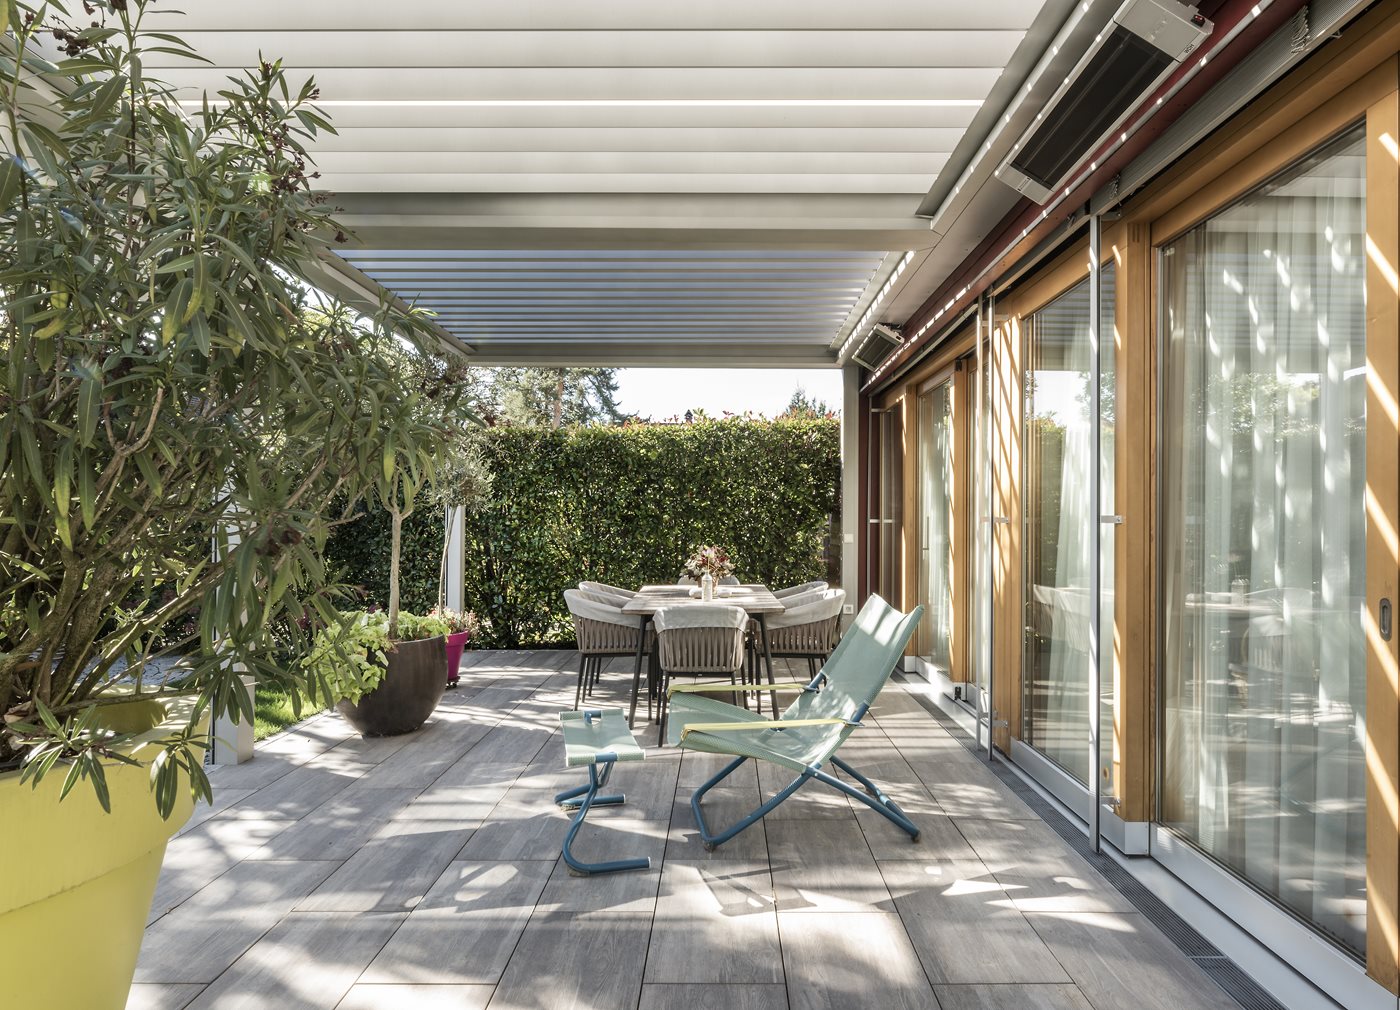 Gardens, verandas and balconies: when the outdoors becomes home.